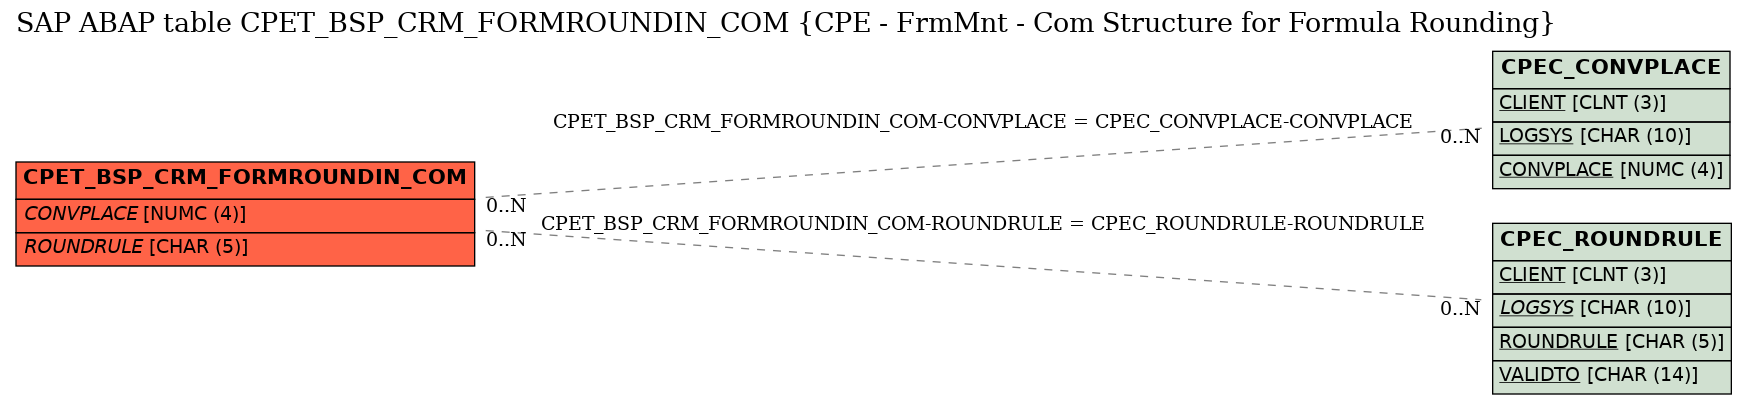 E-R Diagram for table CPET_BSP_CRM_FORMROUNDIN_COM (CPE - FrmMnt - Com Structure for Formula Rounding)